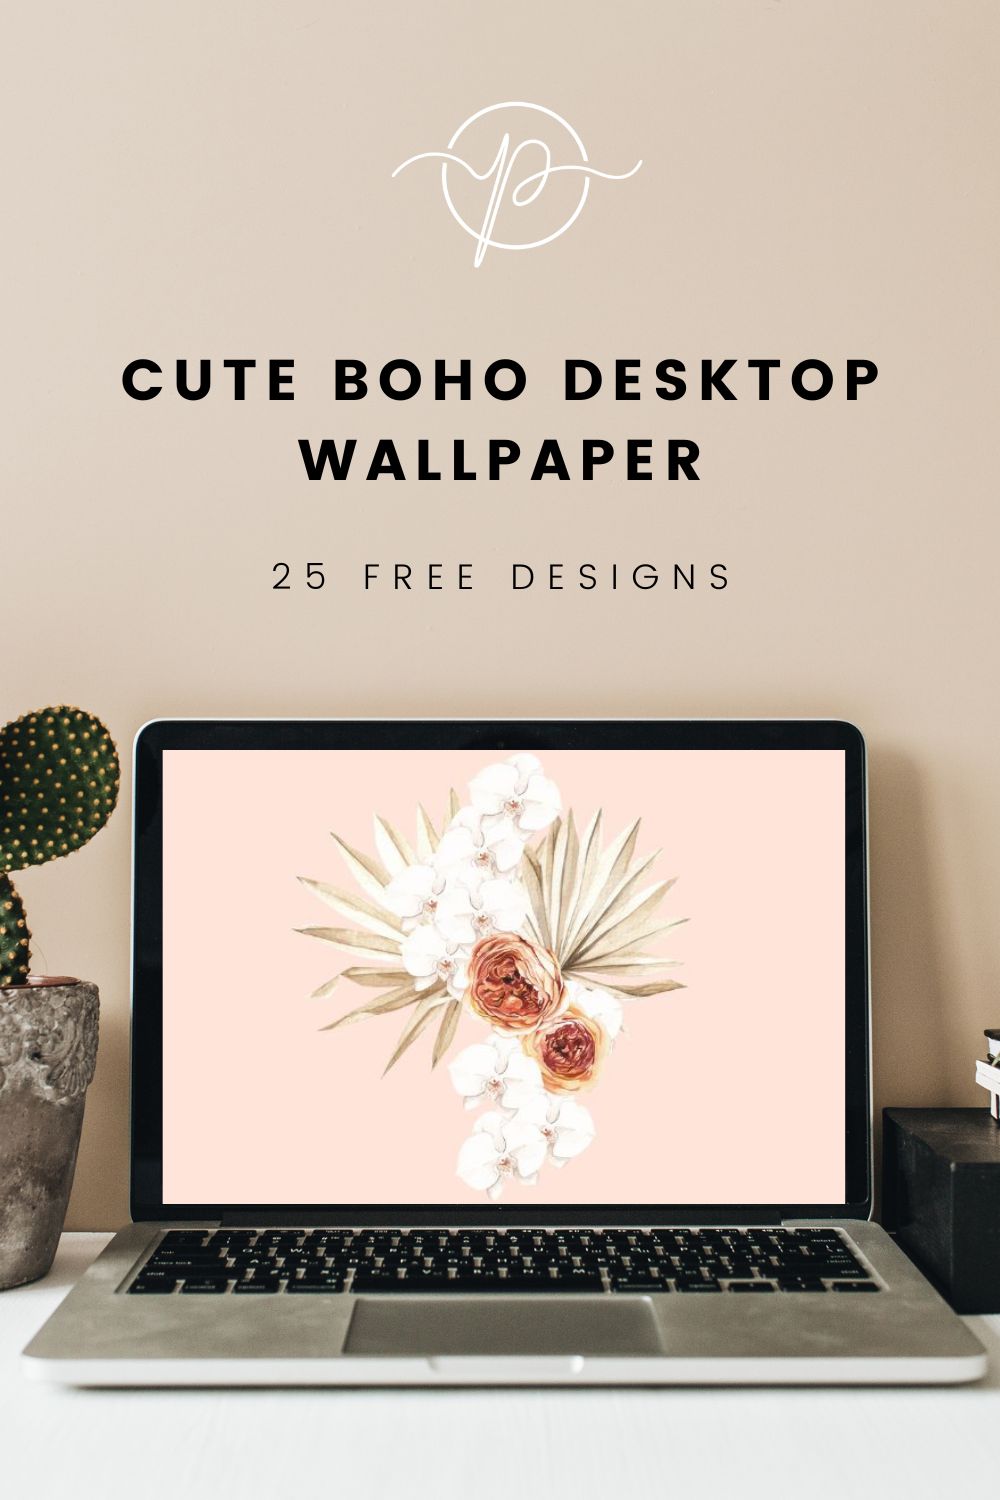 Cute Boho Desktop Wallpapers